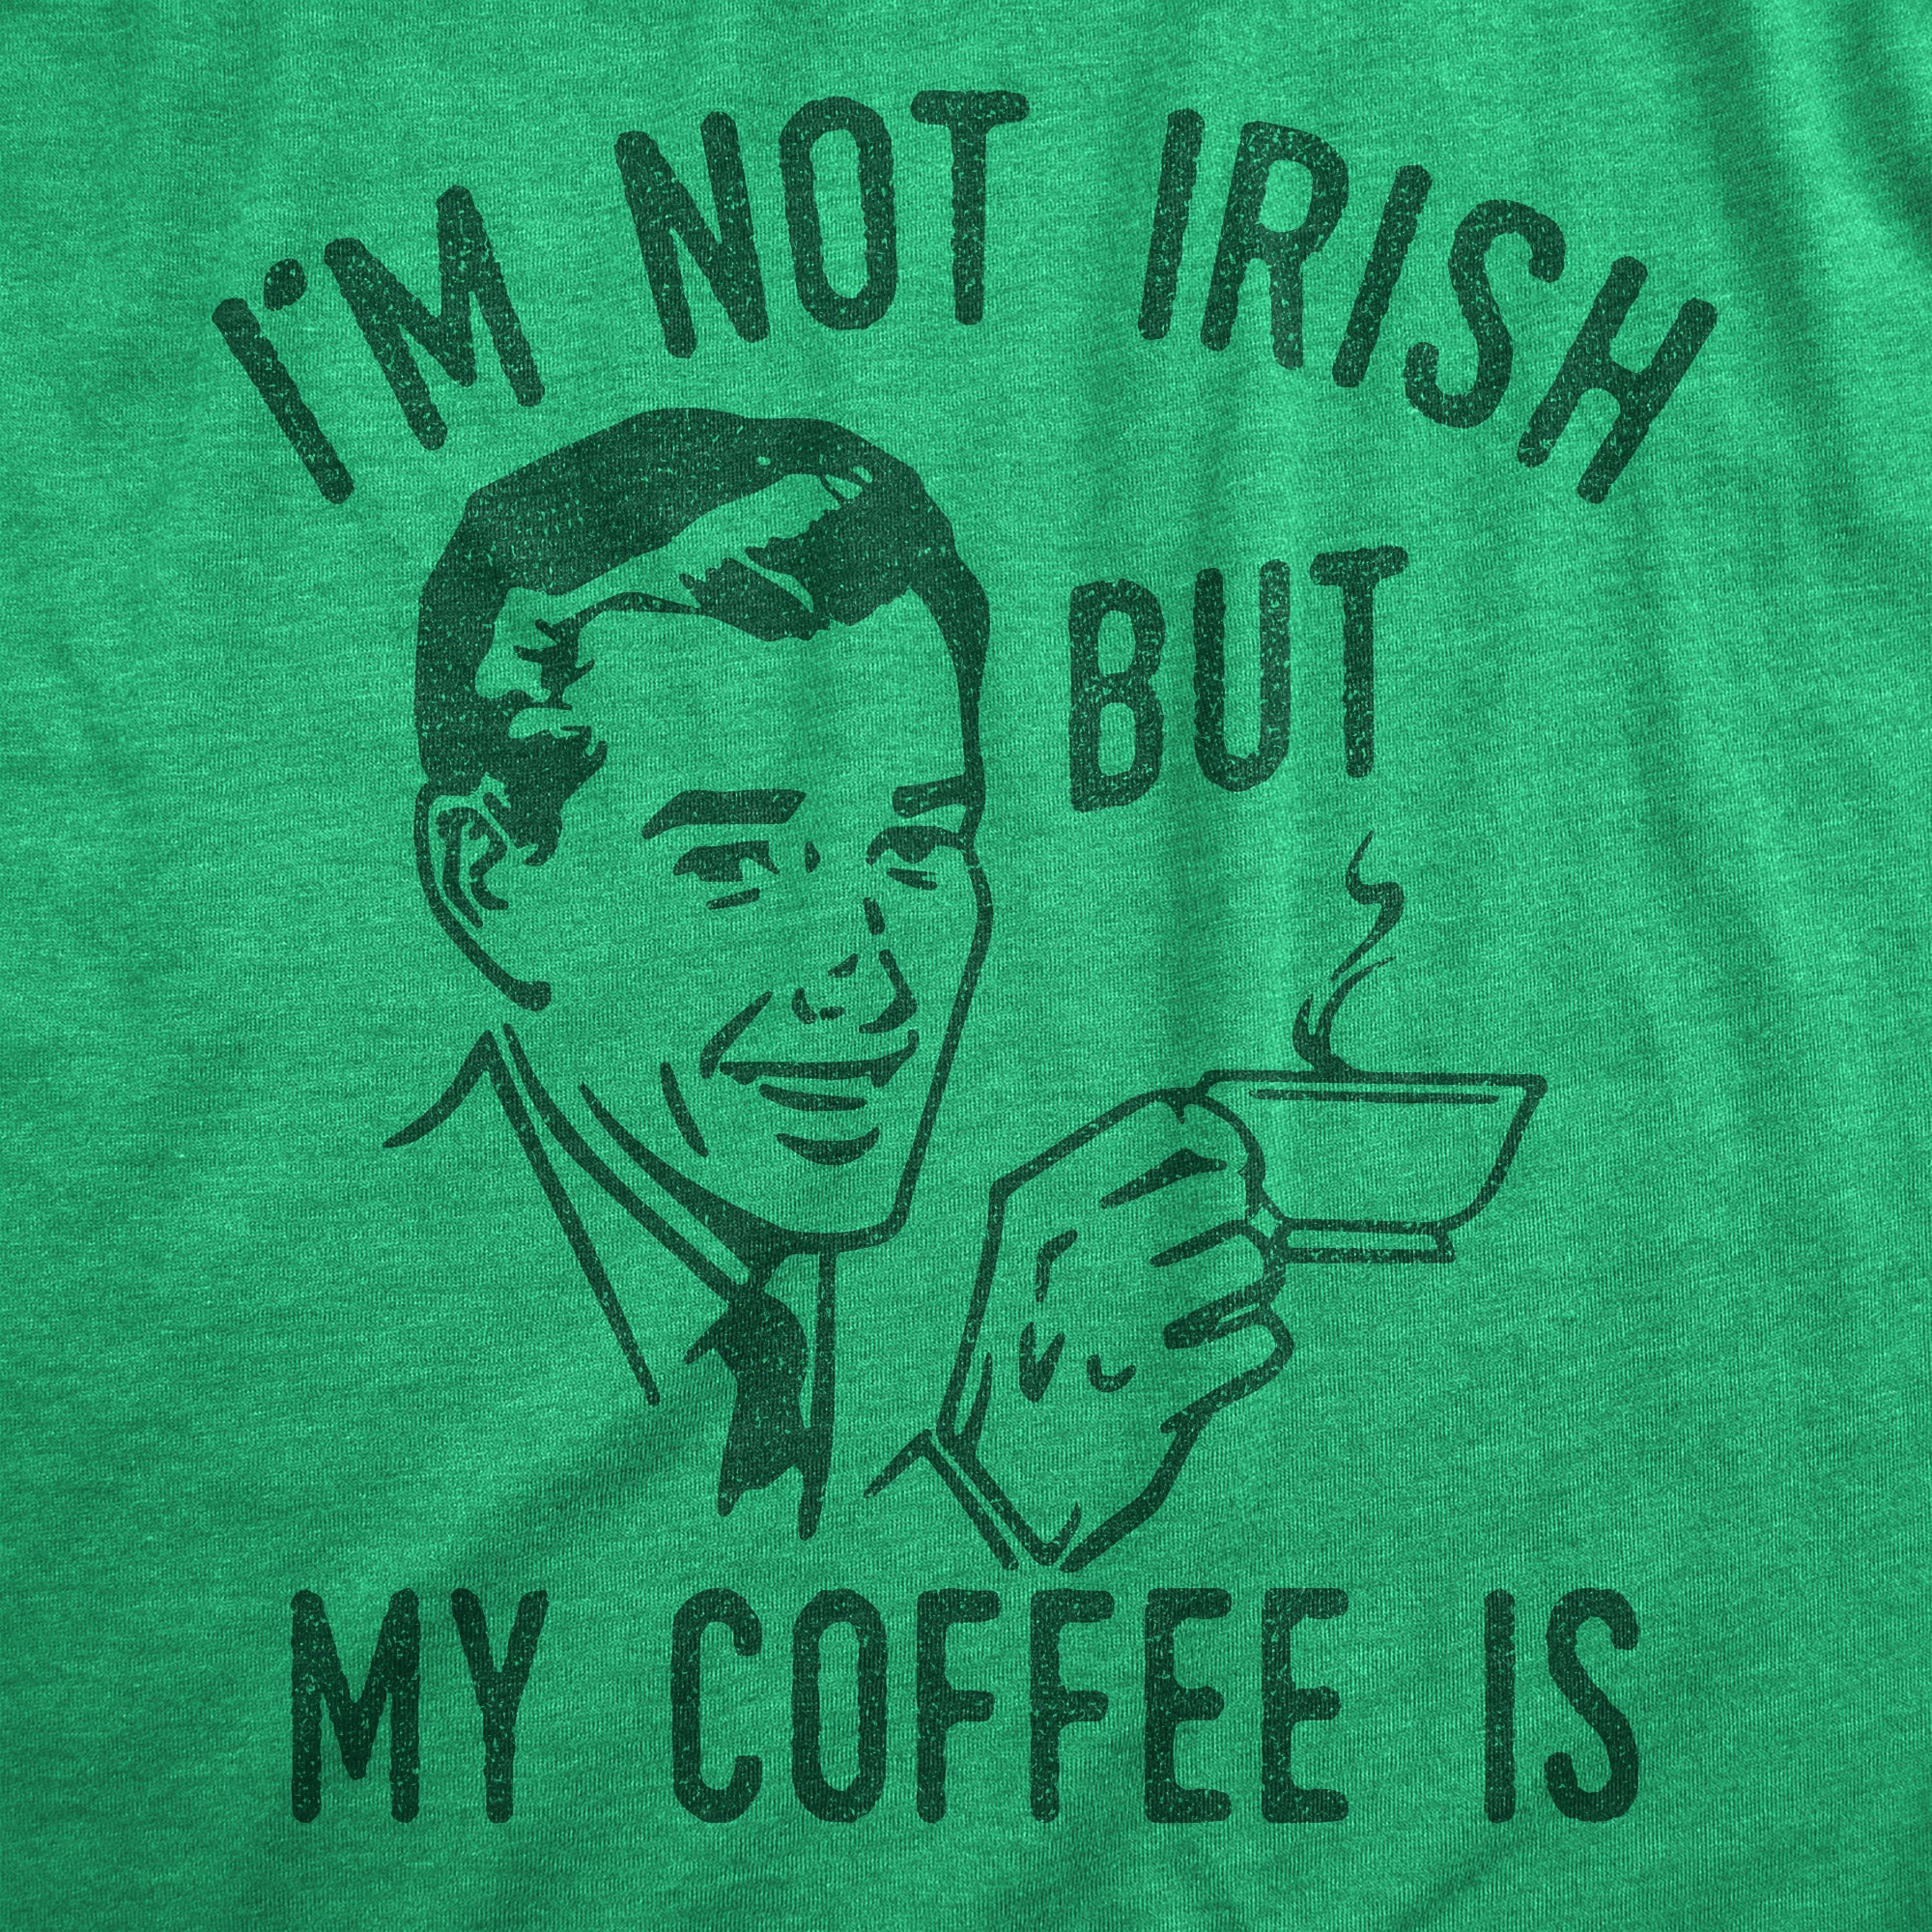 Funny Heather Green - IRISH Im Not Irish But My Coffee Is Womens T Shirt Nerdy Saint Patrick's Day Drinking Coffee Tee